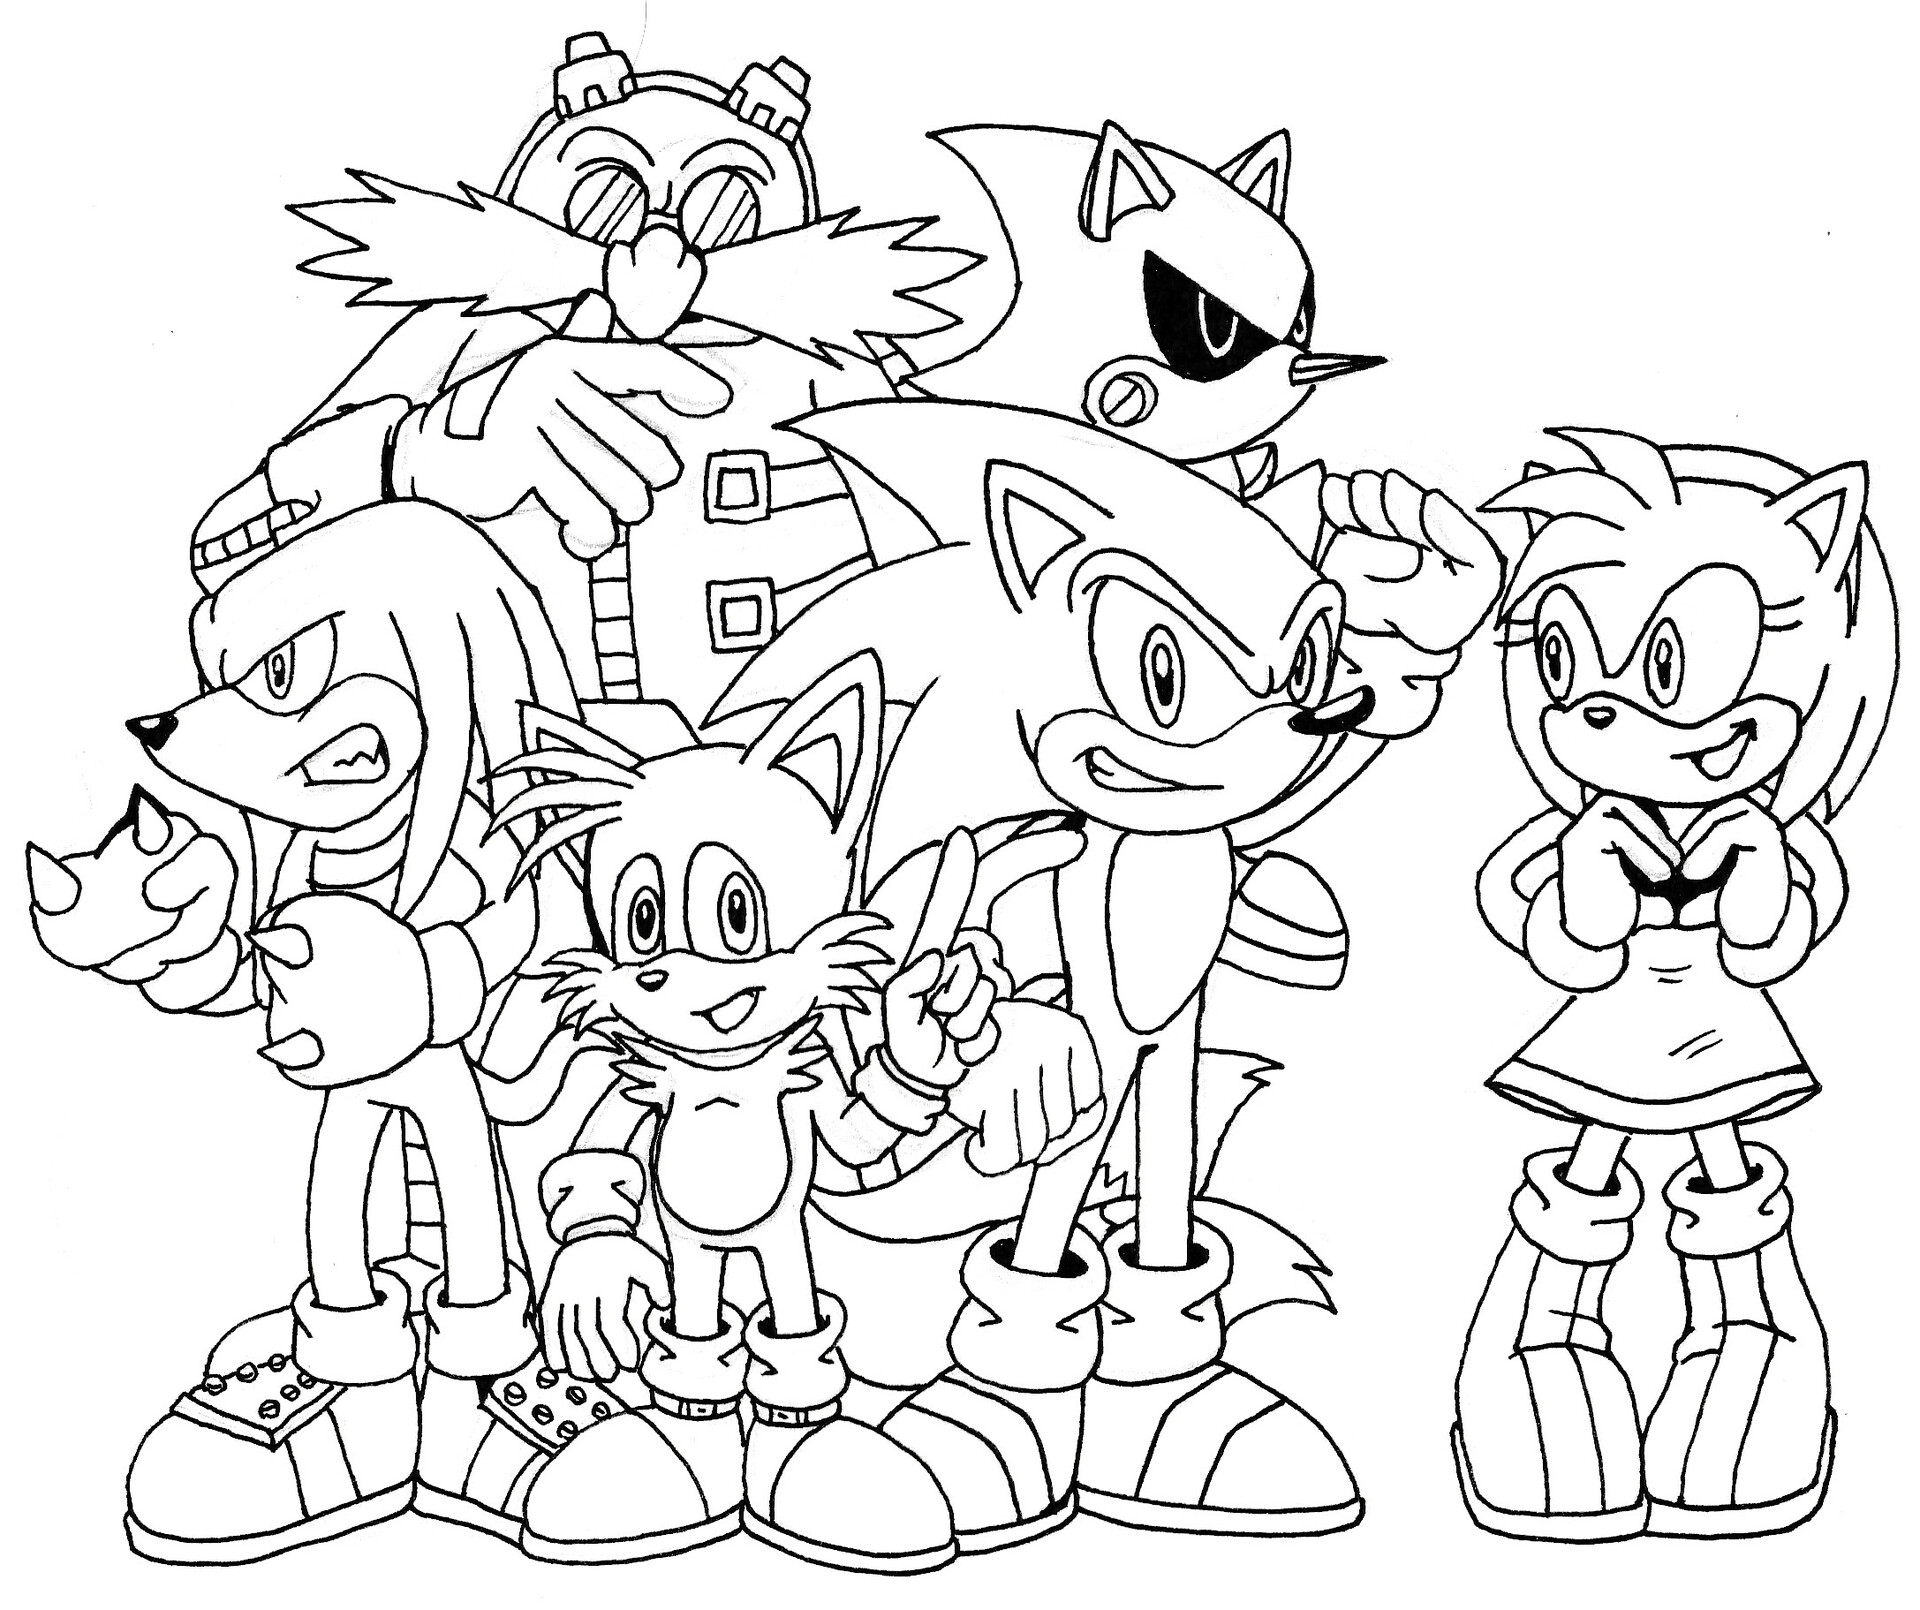 Vix - Sonic the Hedgehog - Retro cast of characters